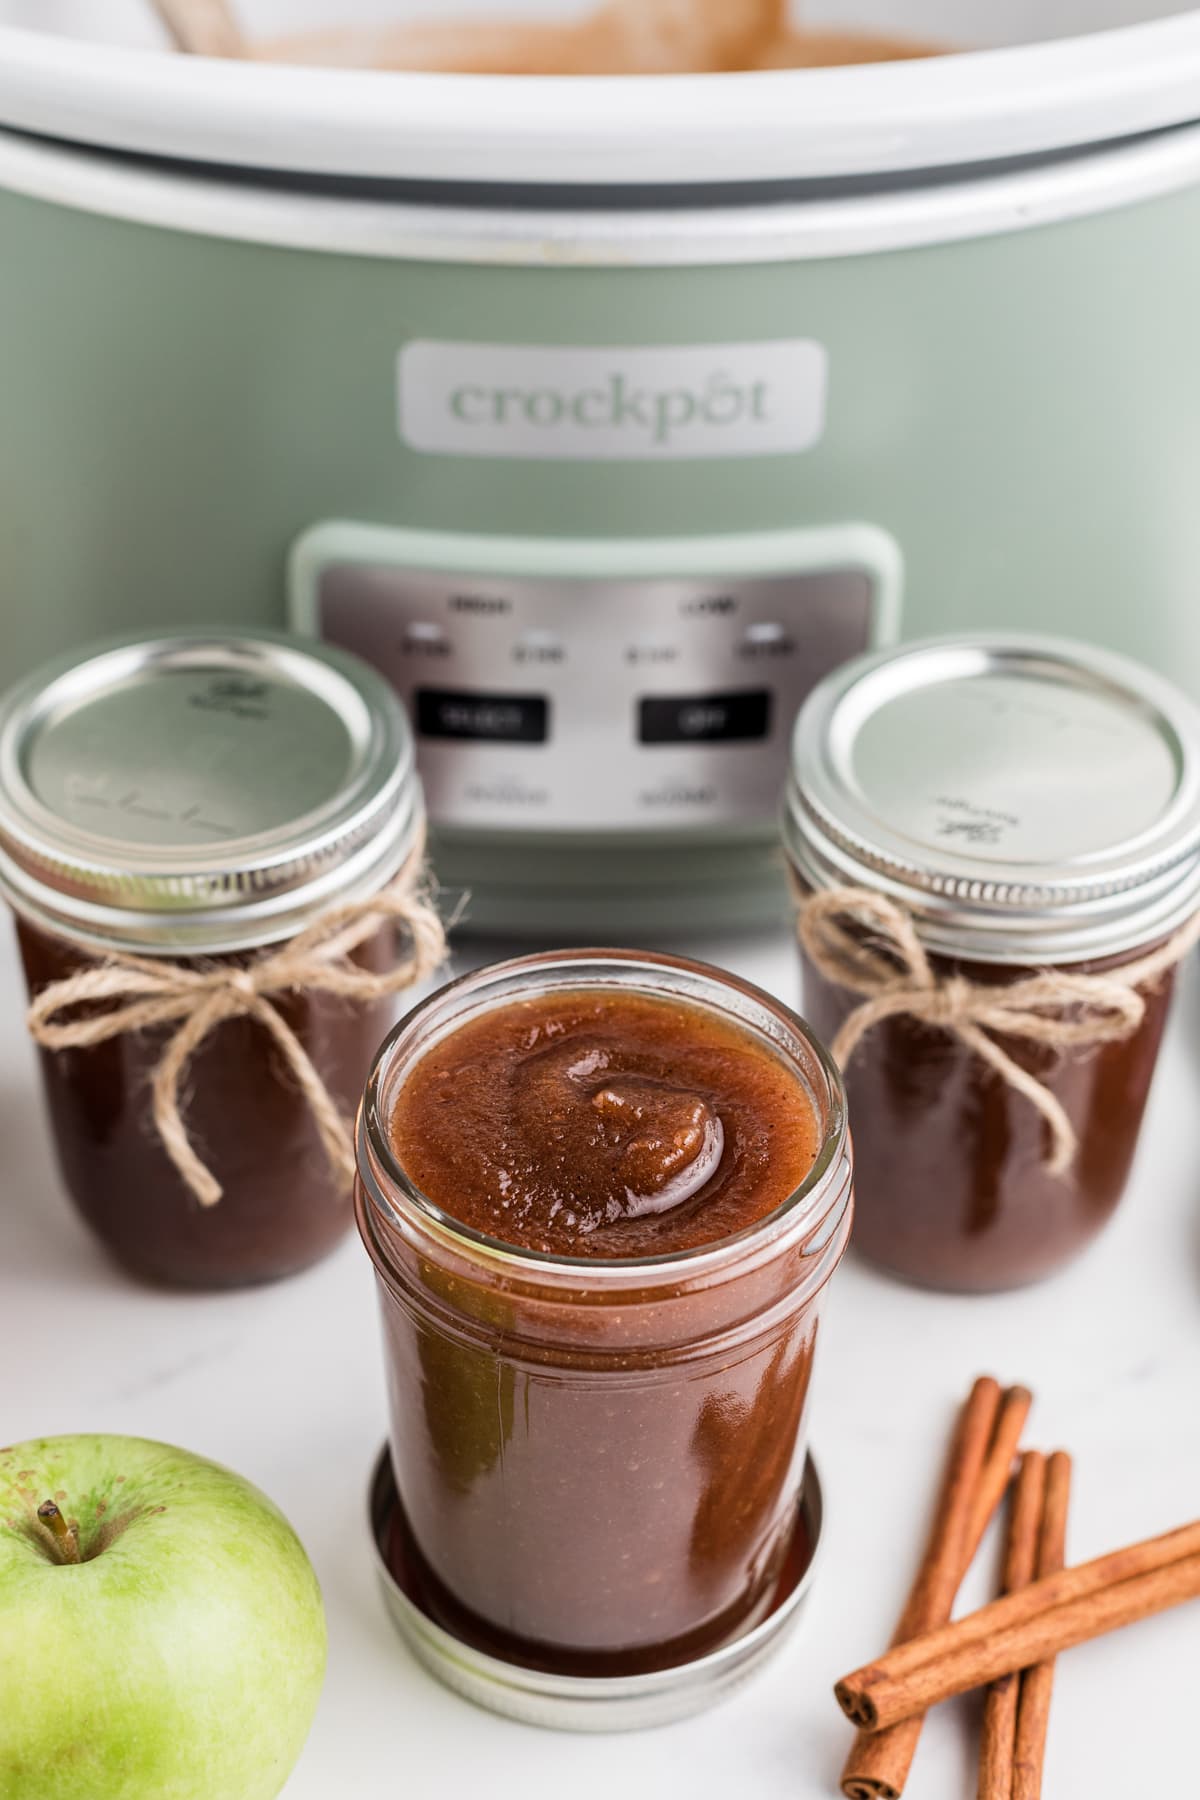 mason jars with crockpot apple butter